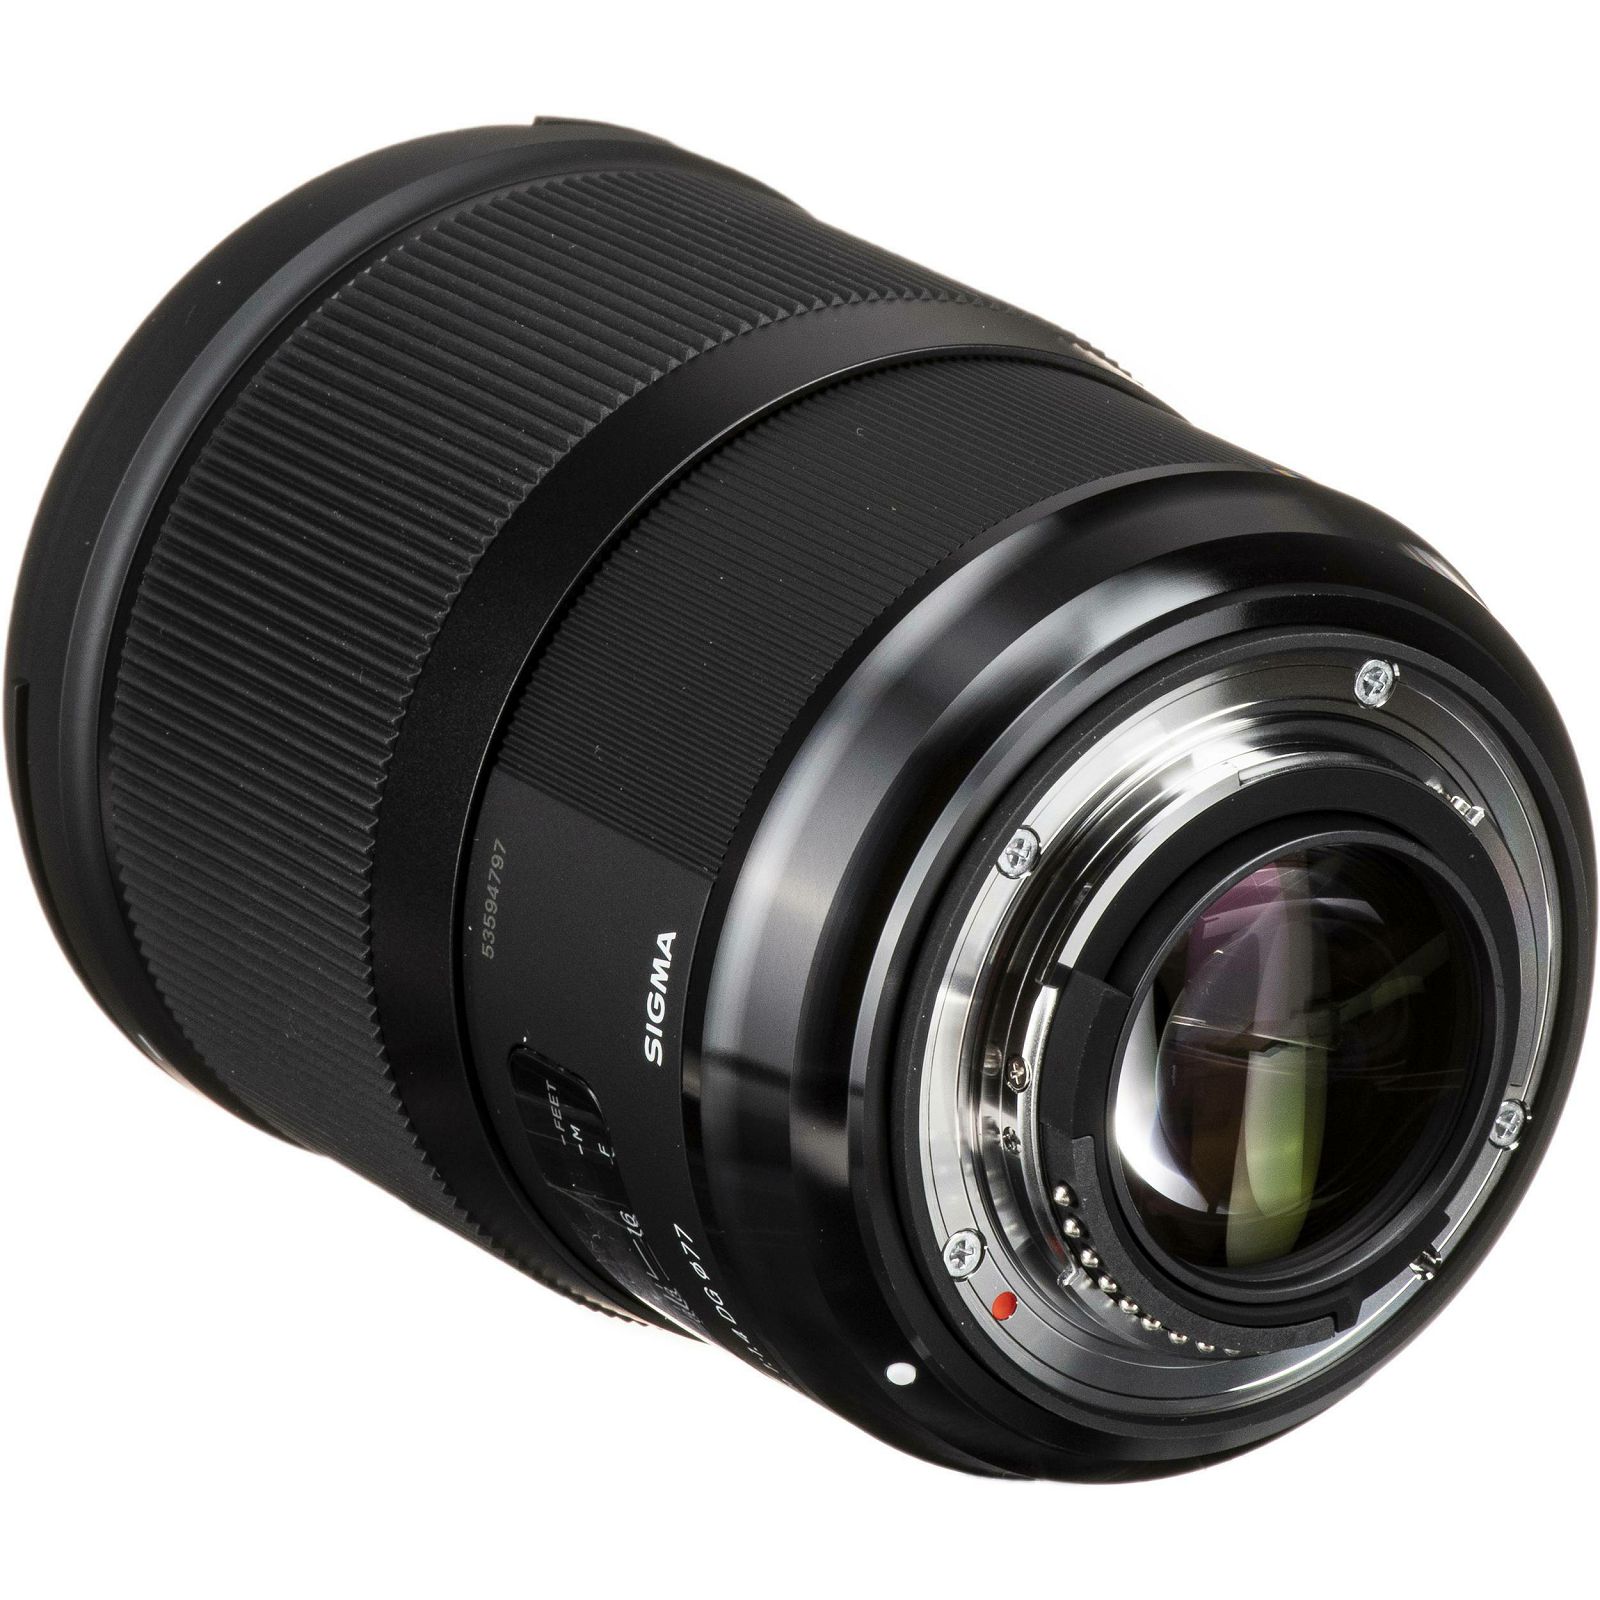 Sigma 28mm f/1.4 DG HSM ART širokokutni objektiv za Nikon FX (441555)